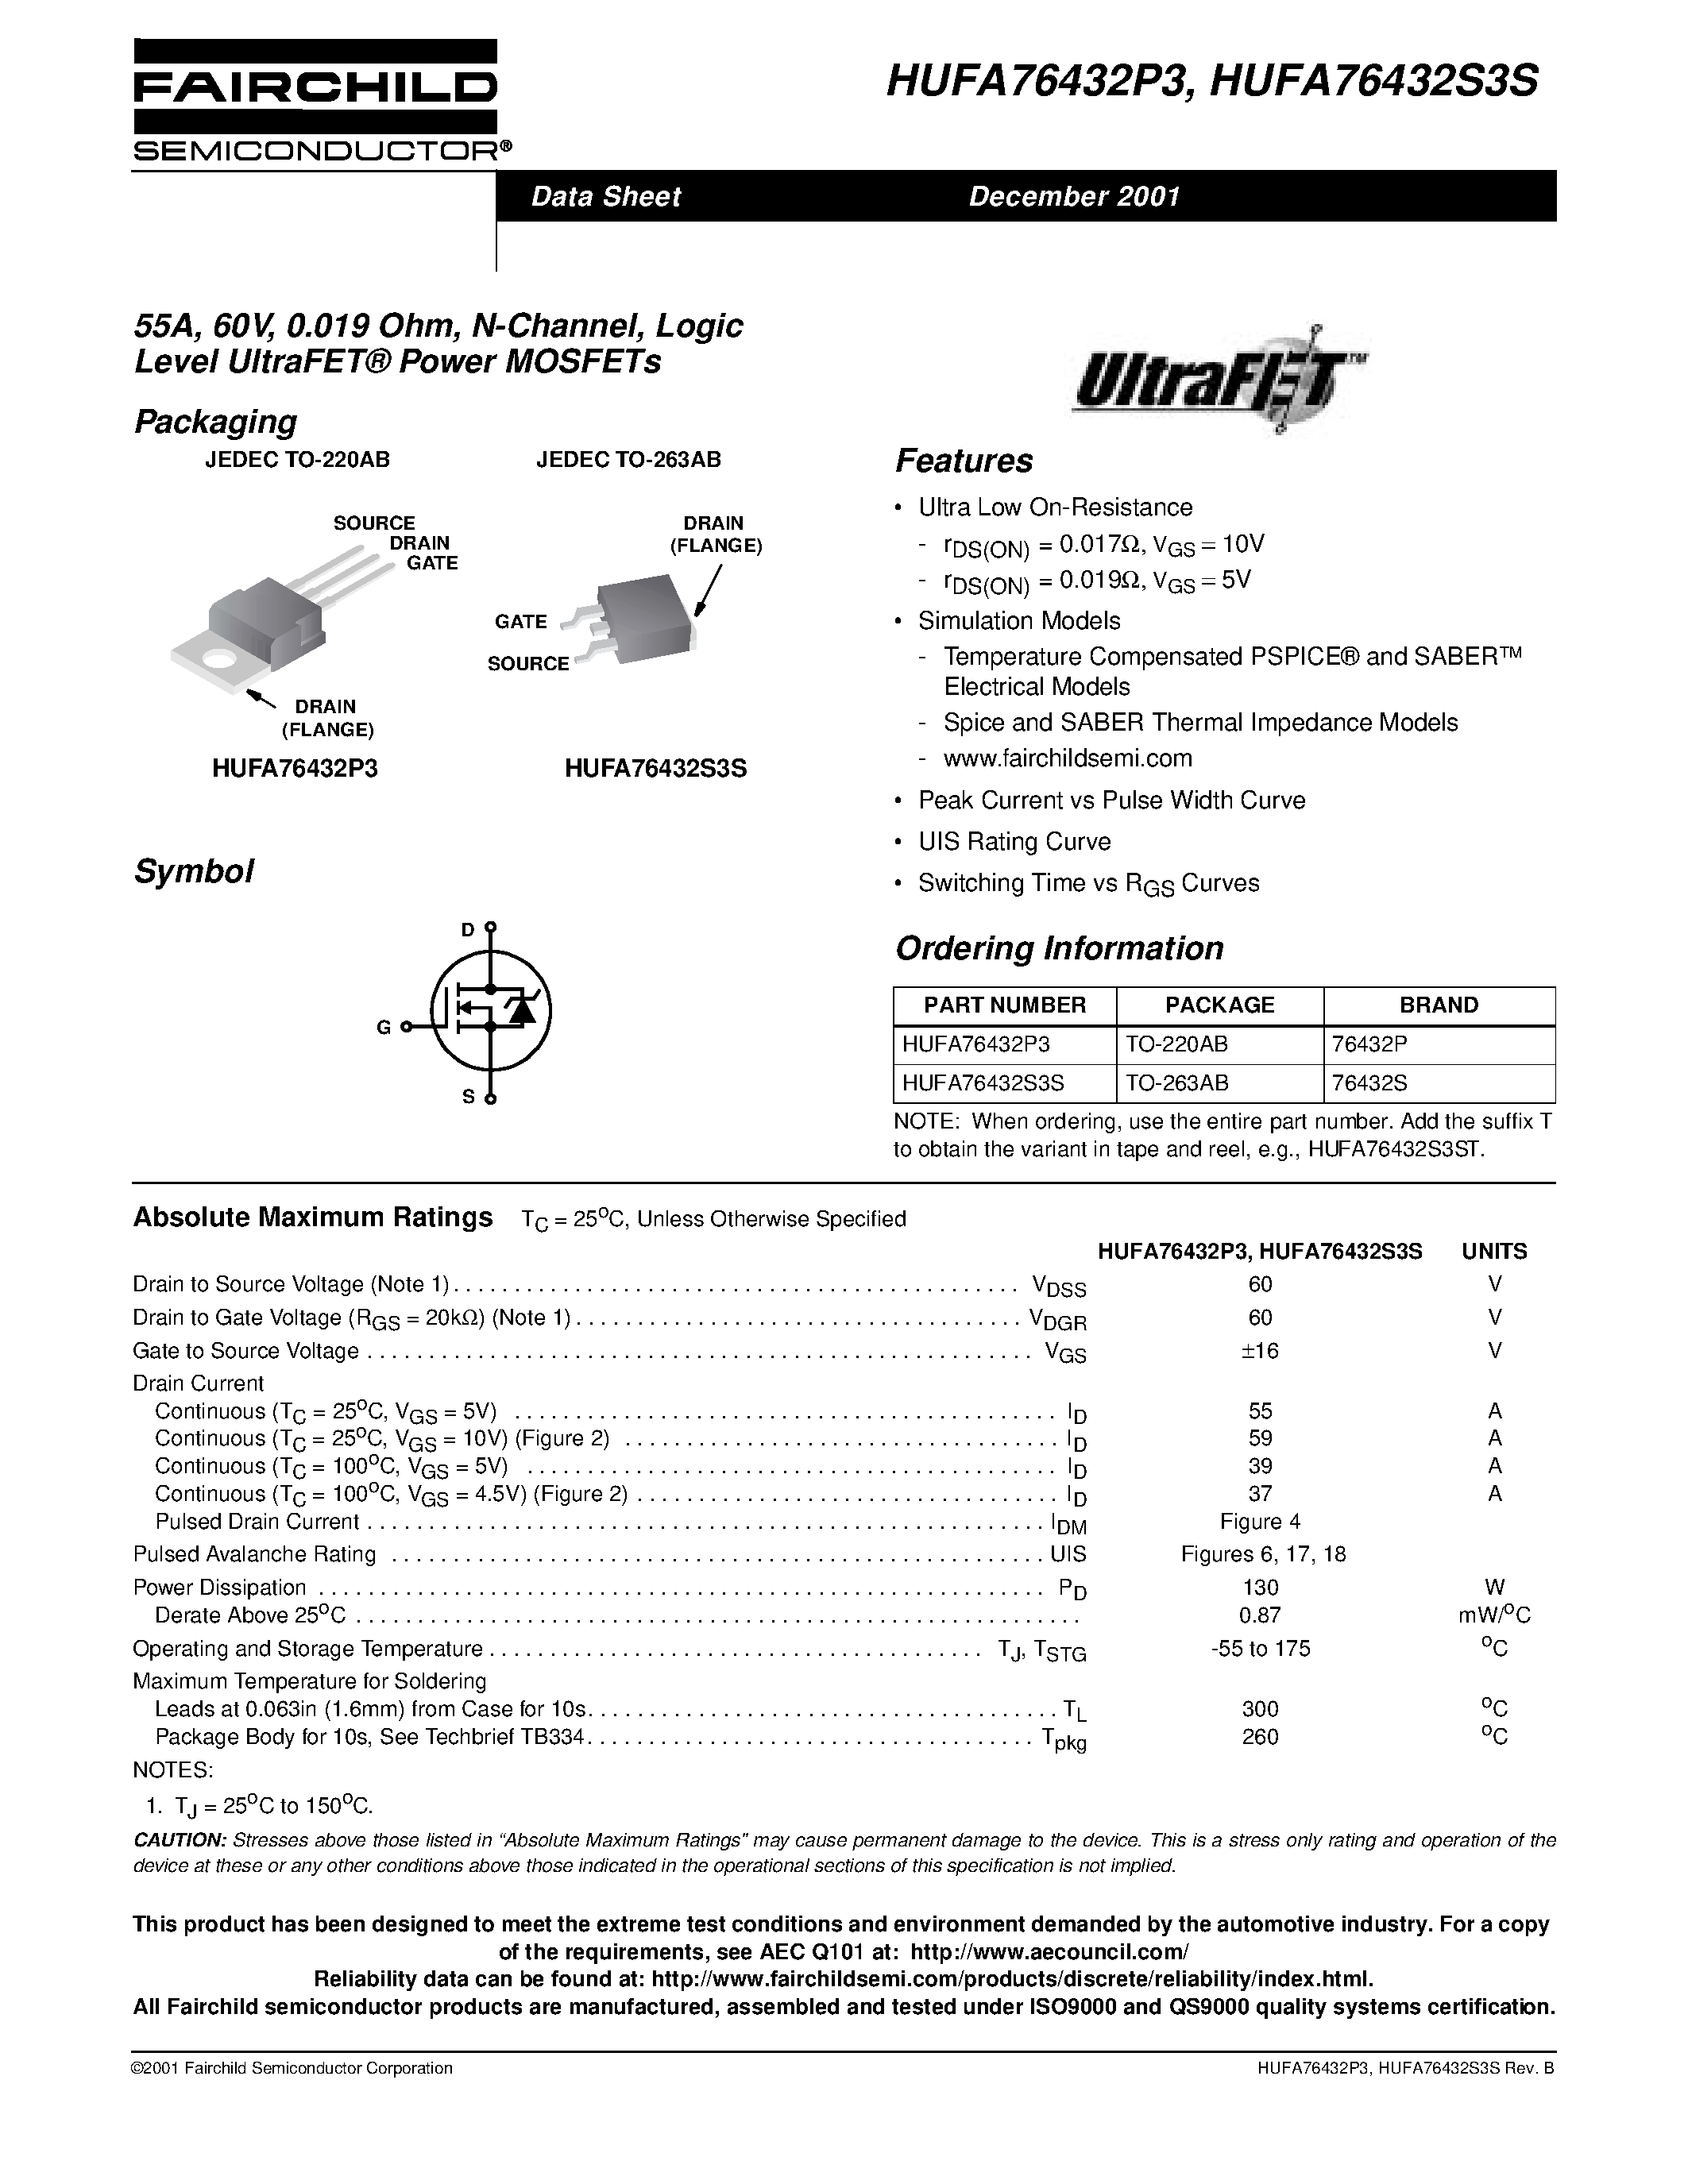 Даташит HUFA76432S3S - 55A/ 60V/ 0.019 Ohm/ N-Channel/ Logic Level UltraFET Power MOSFETs страница 1